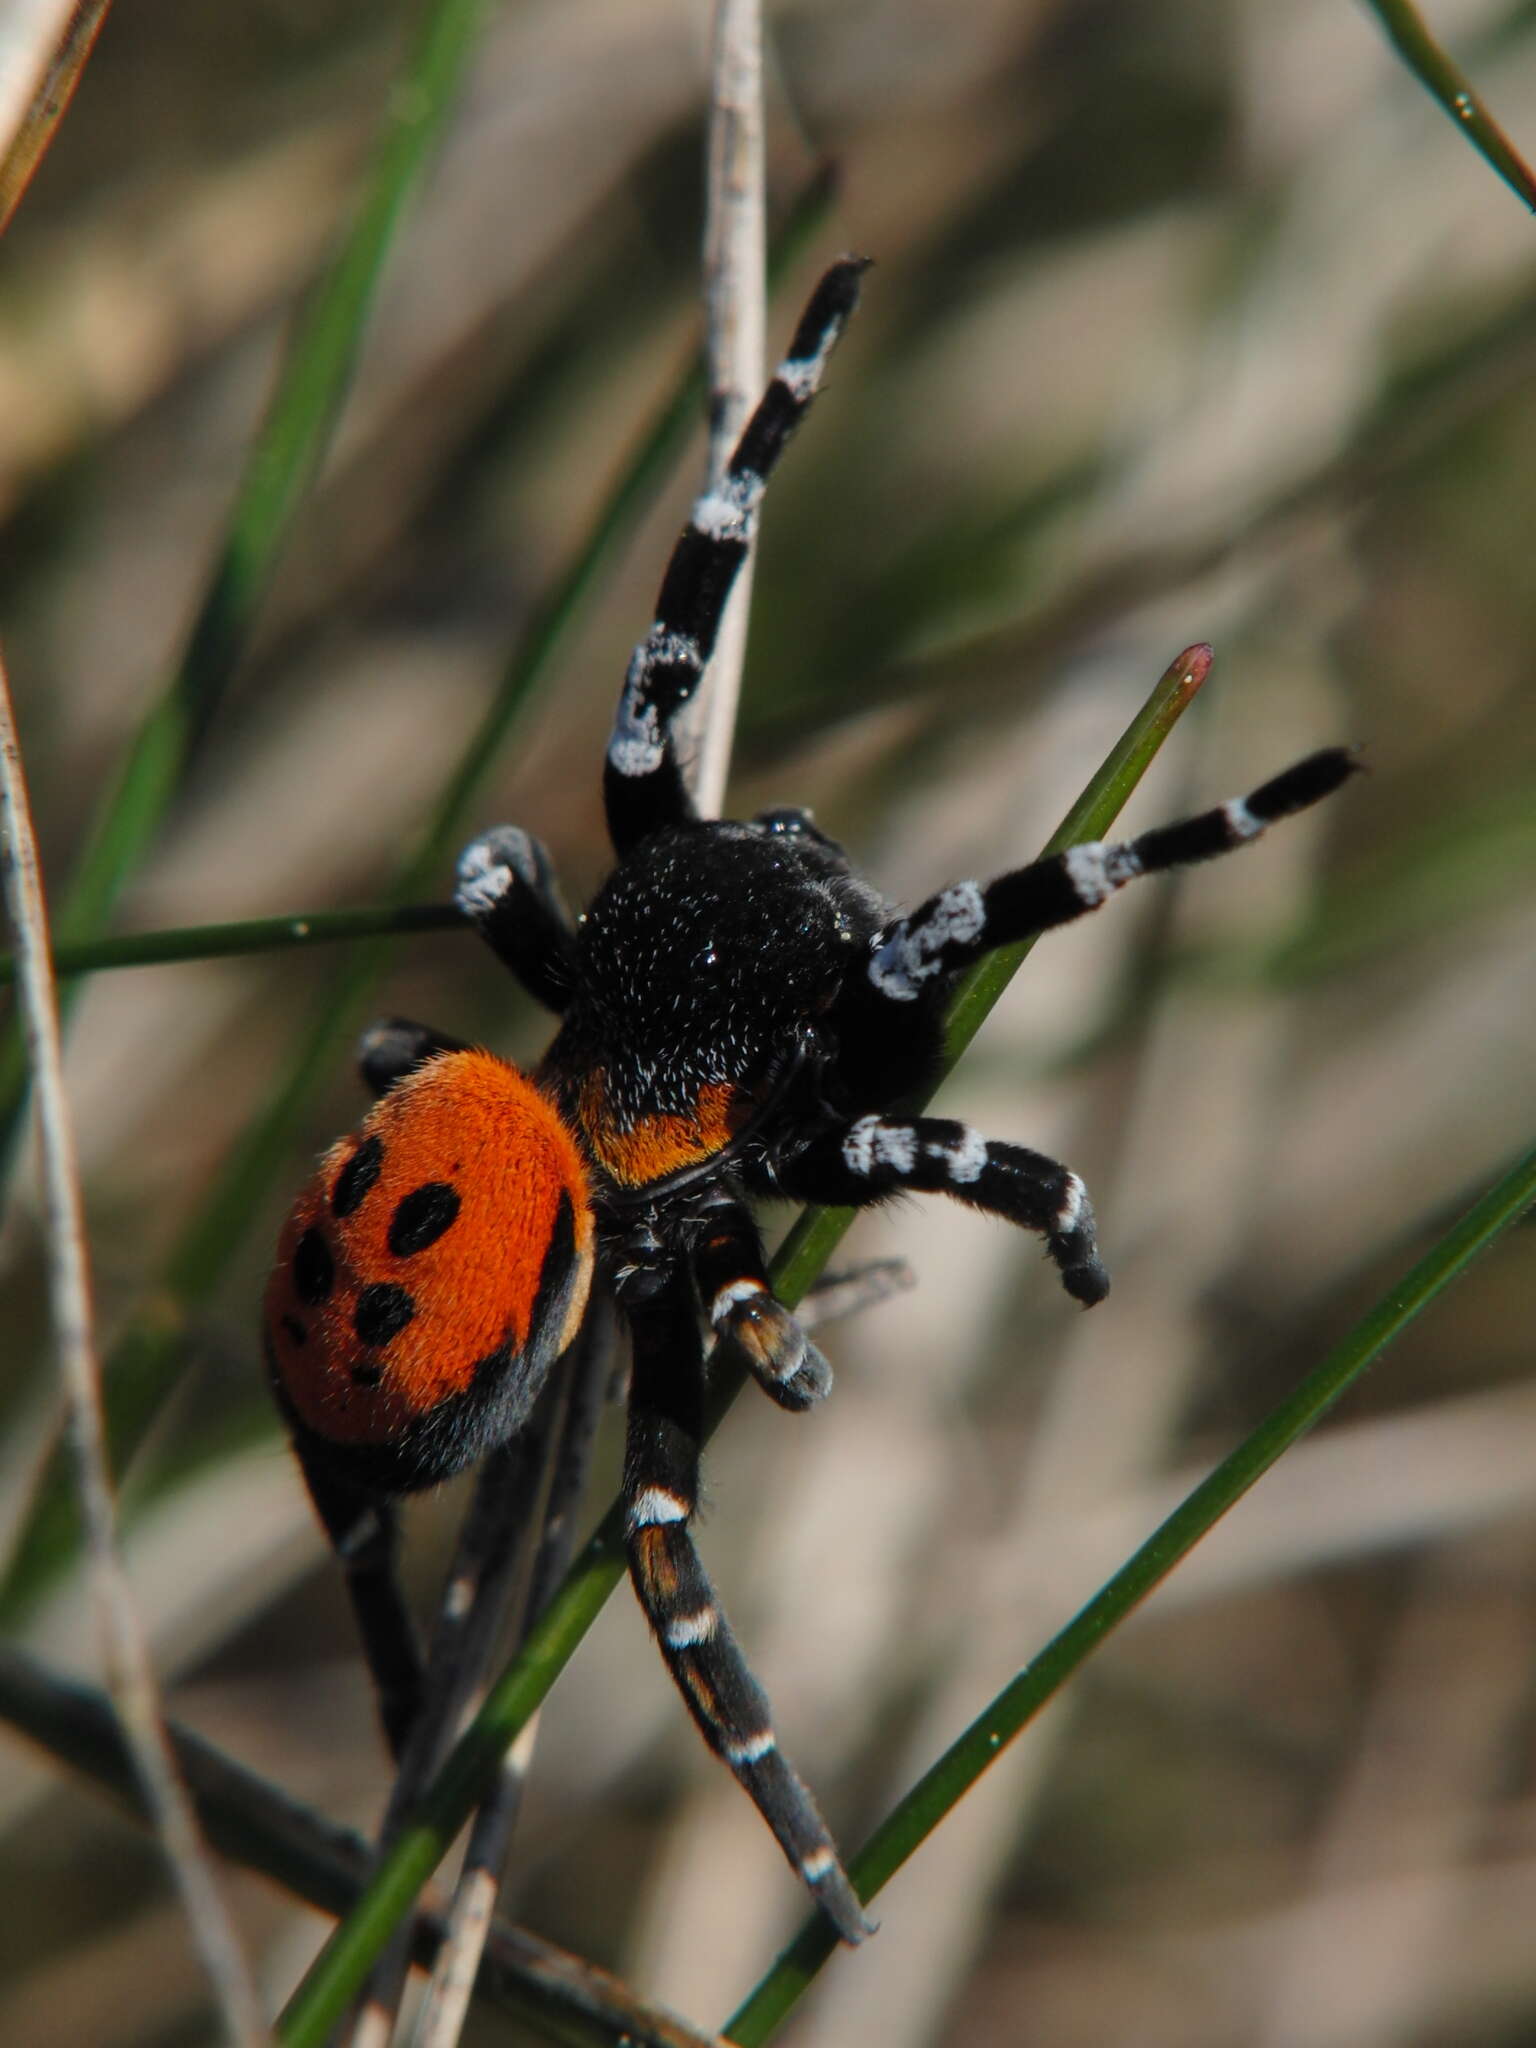 Image of Ladybird spider